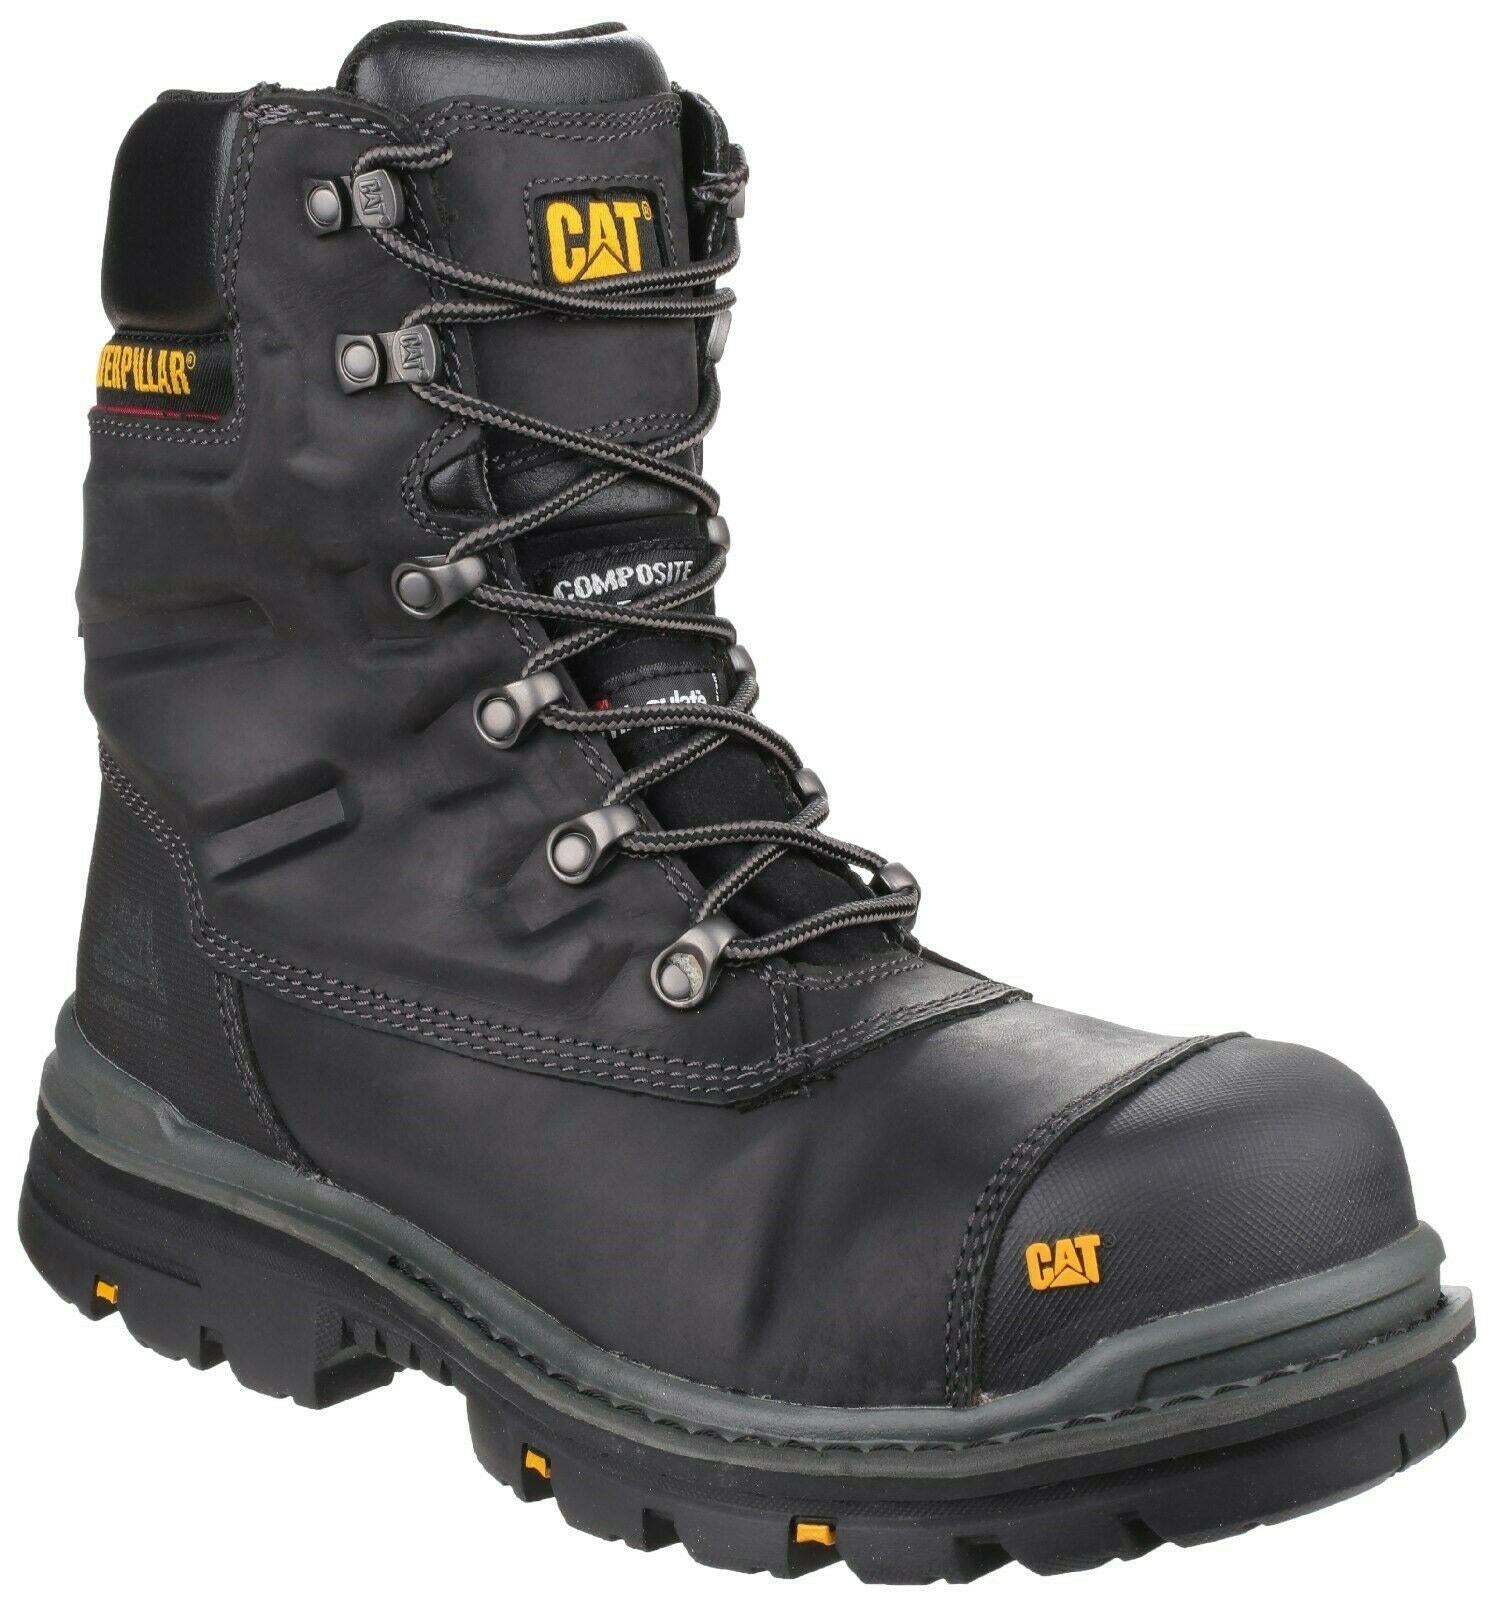 CATERPILLAR CAT Premier S3 black side-zip composite toe/midsole safety work boot